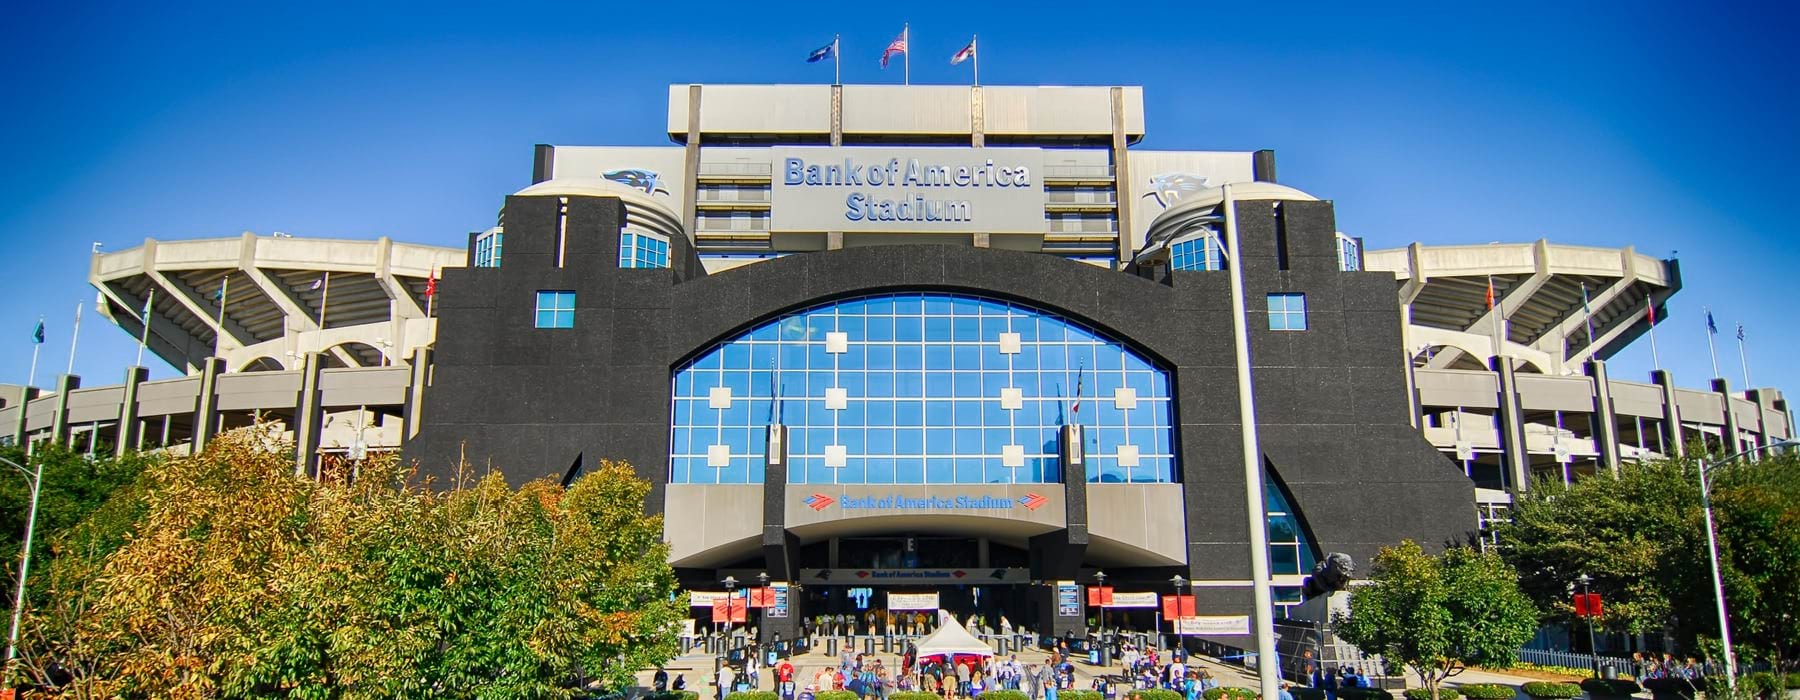 Bank of America Stadium entrance